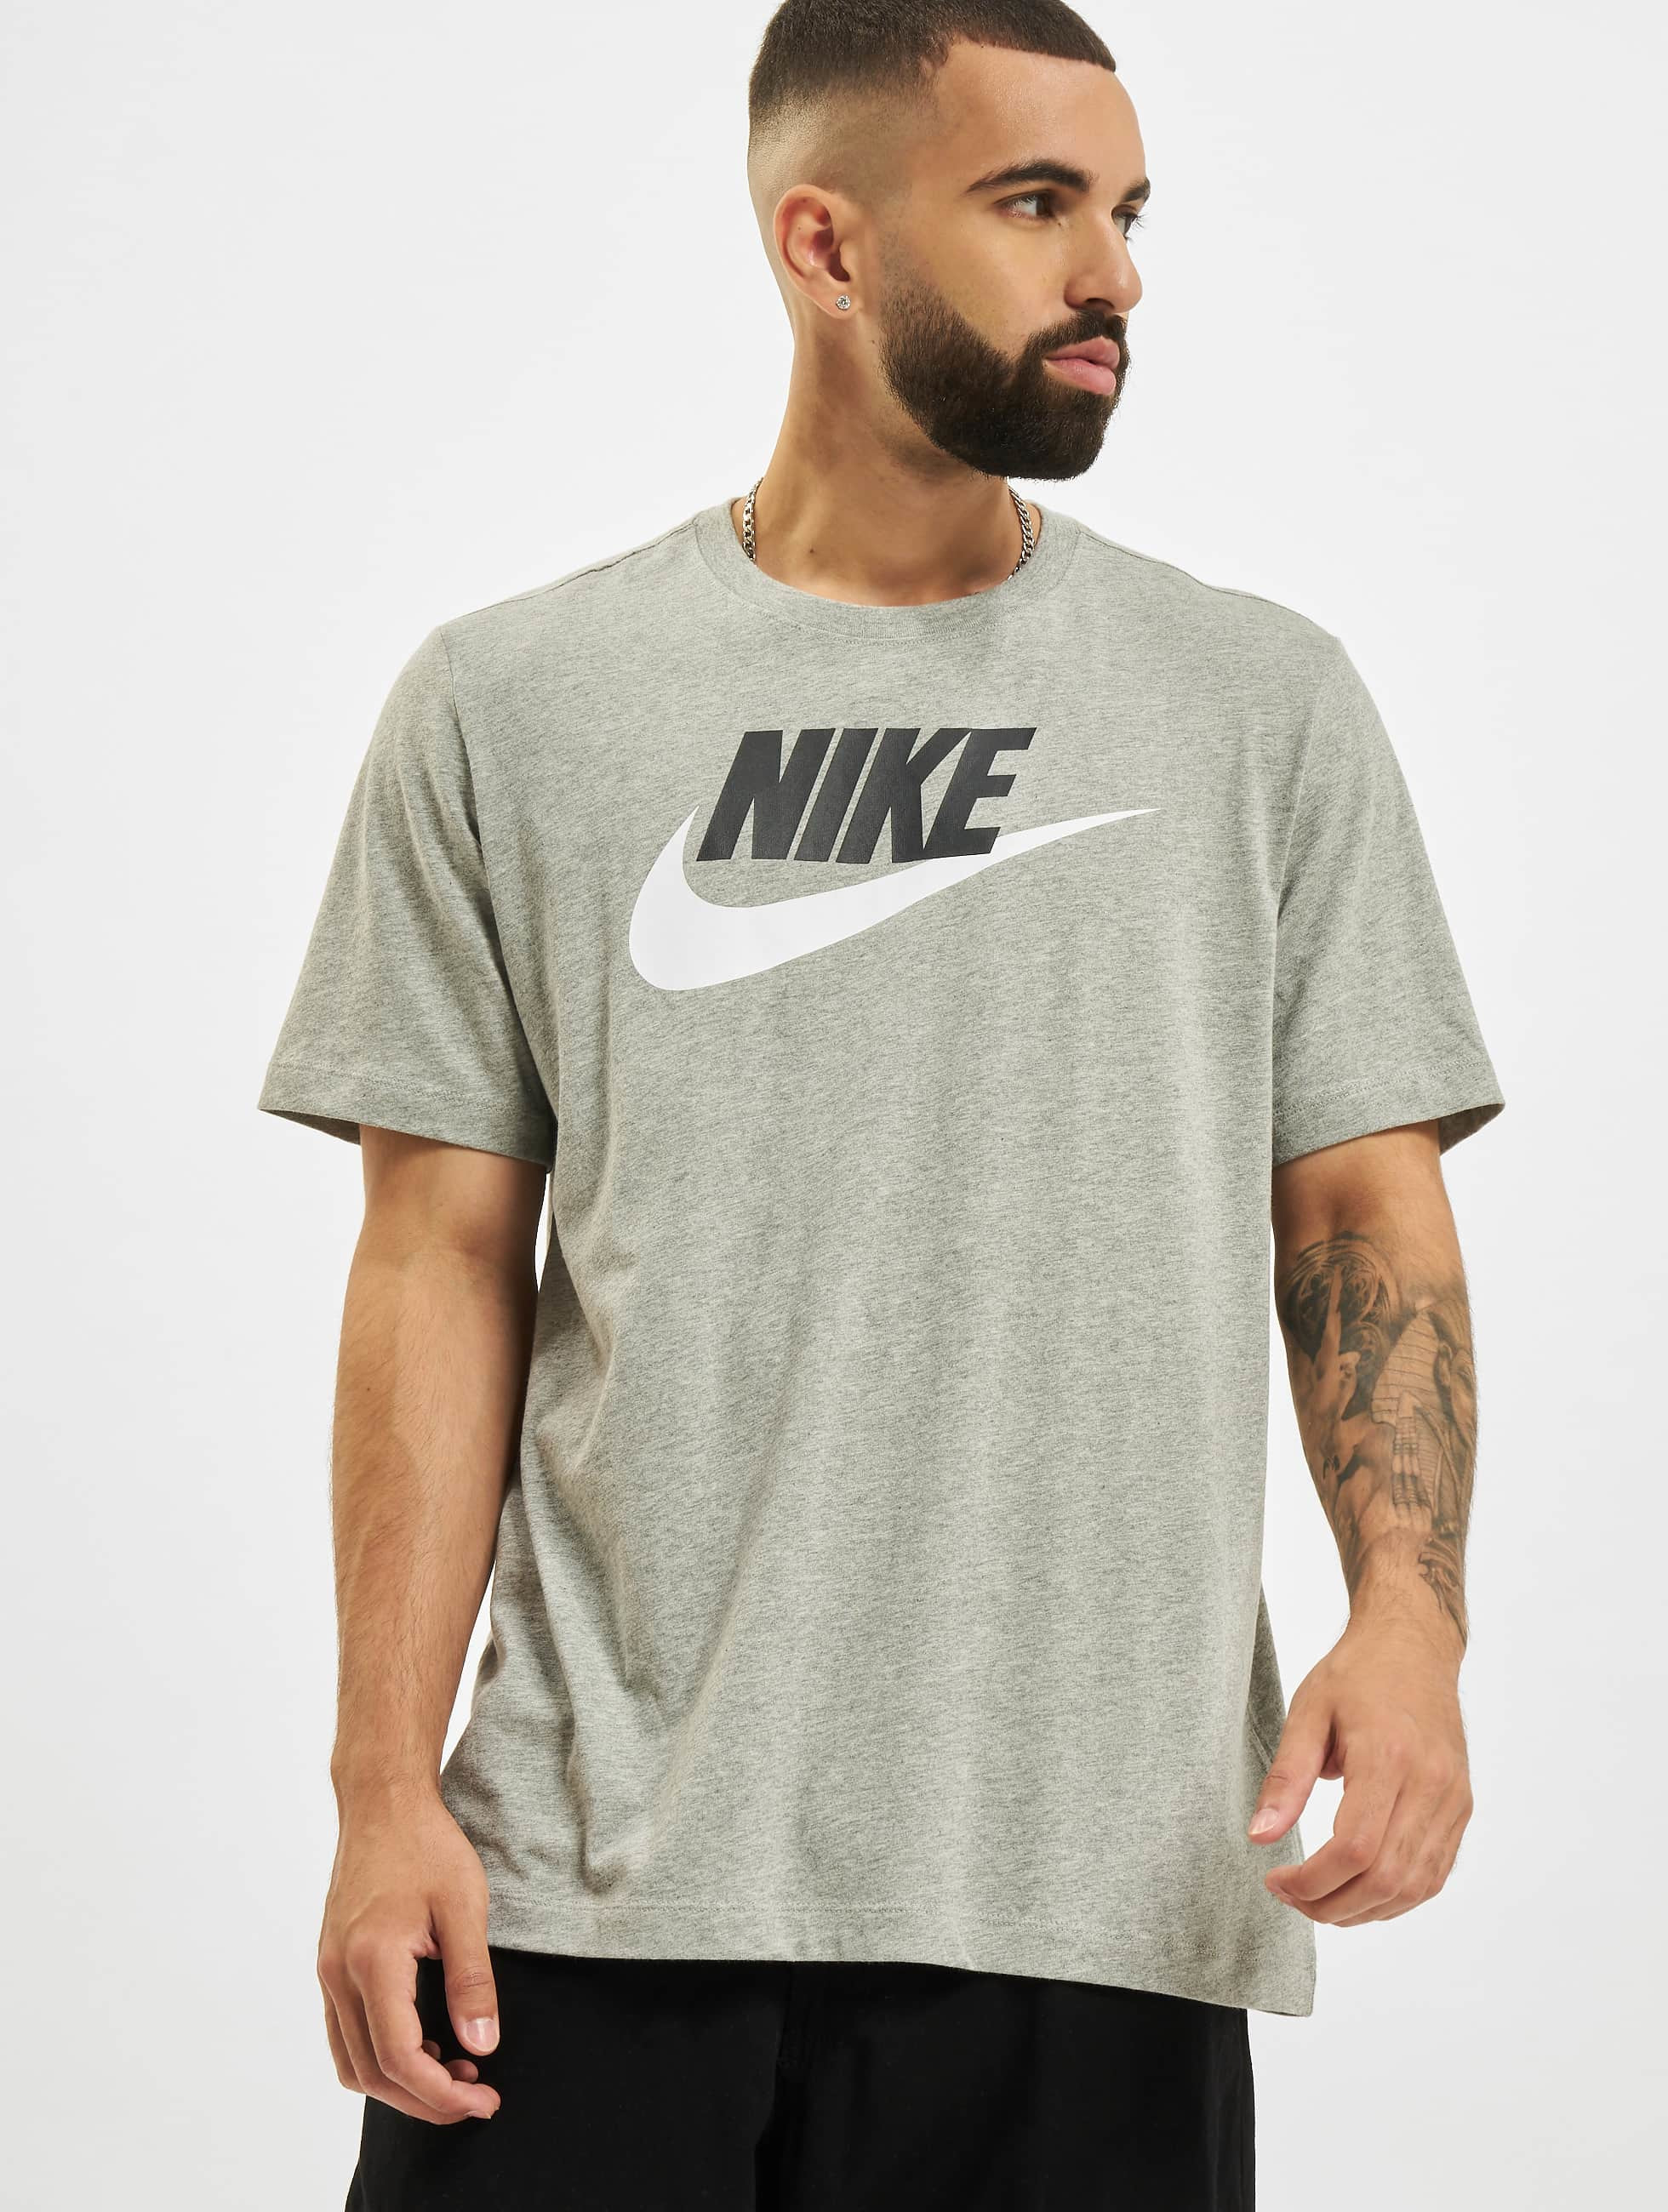 Nike Overwear / in grey